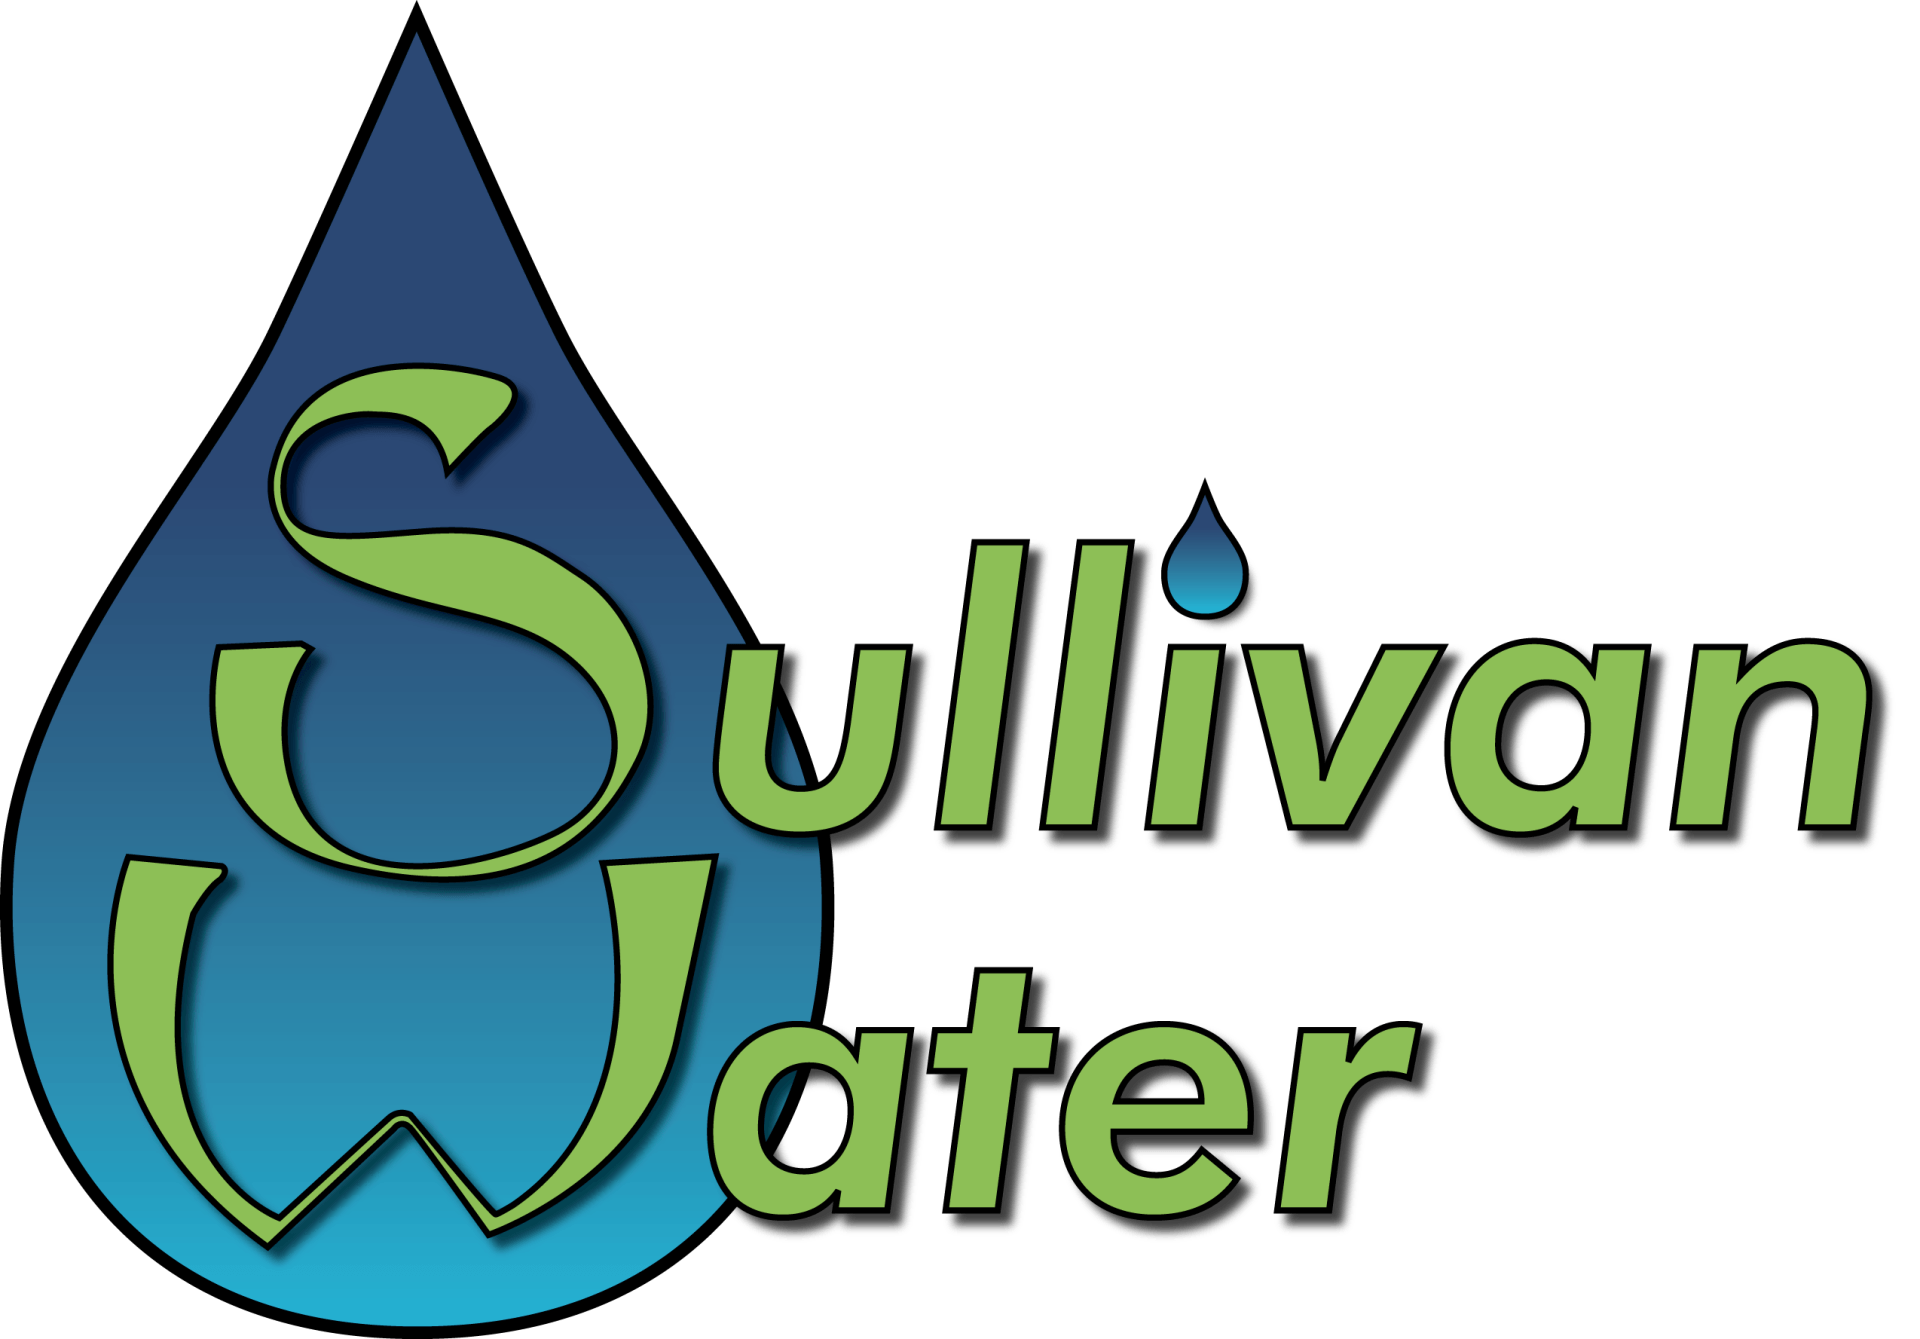 Sullivan Water - Logo